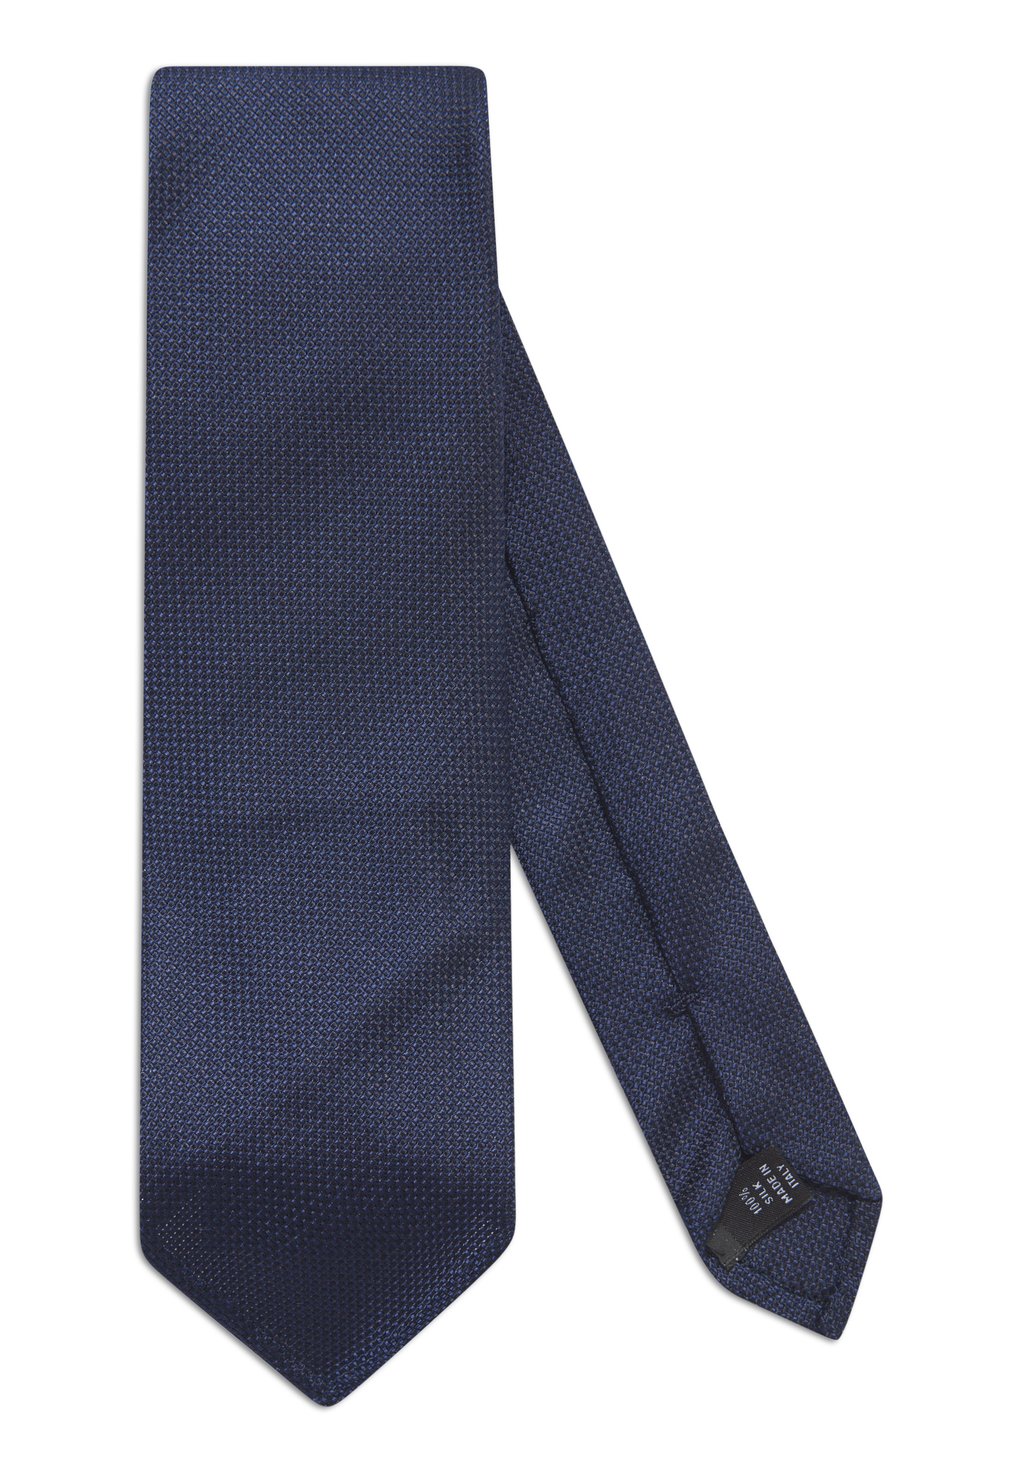 галстук oscar jacobson цвет french blue Галстук Oscar Jacobson, цвет navy